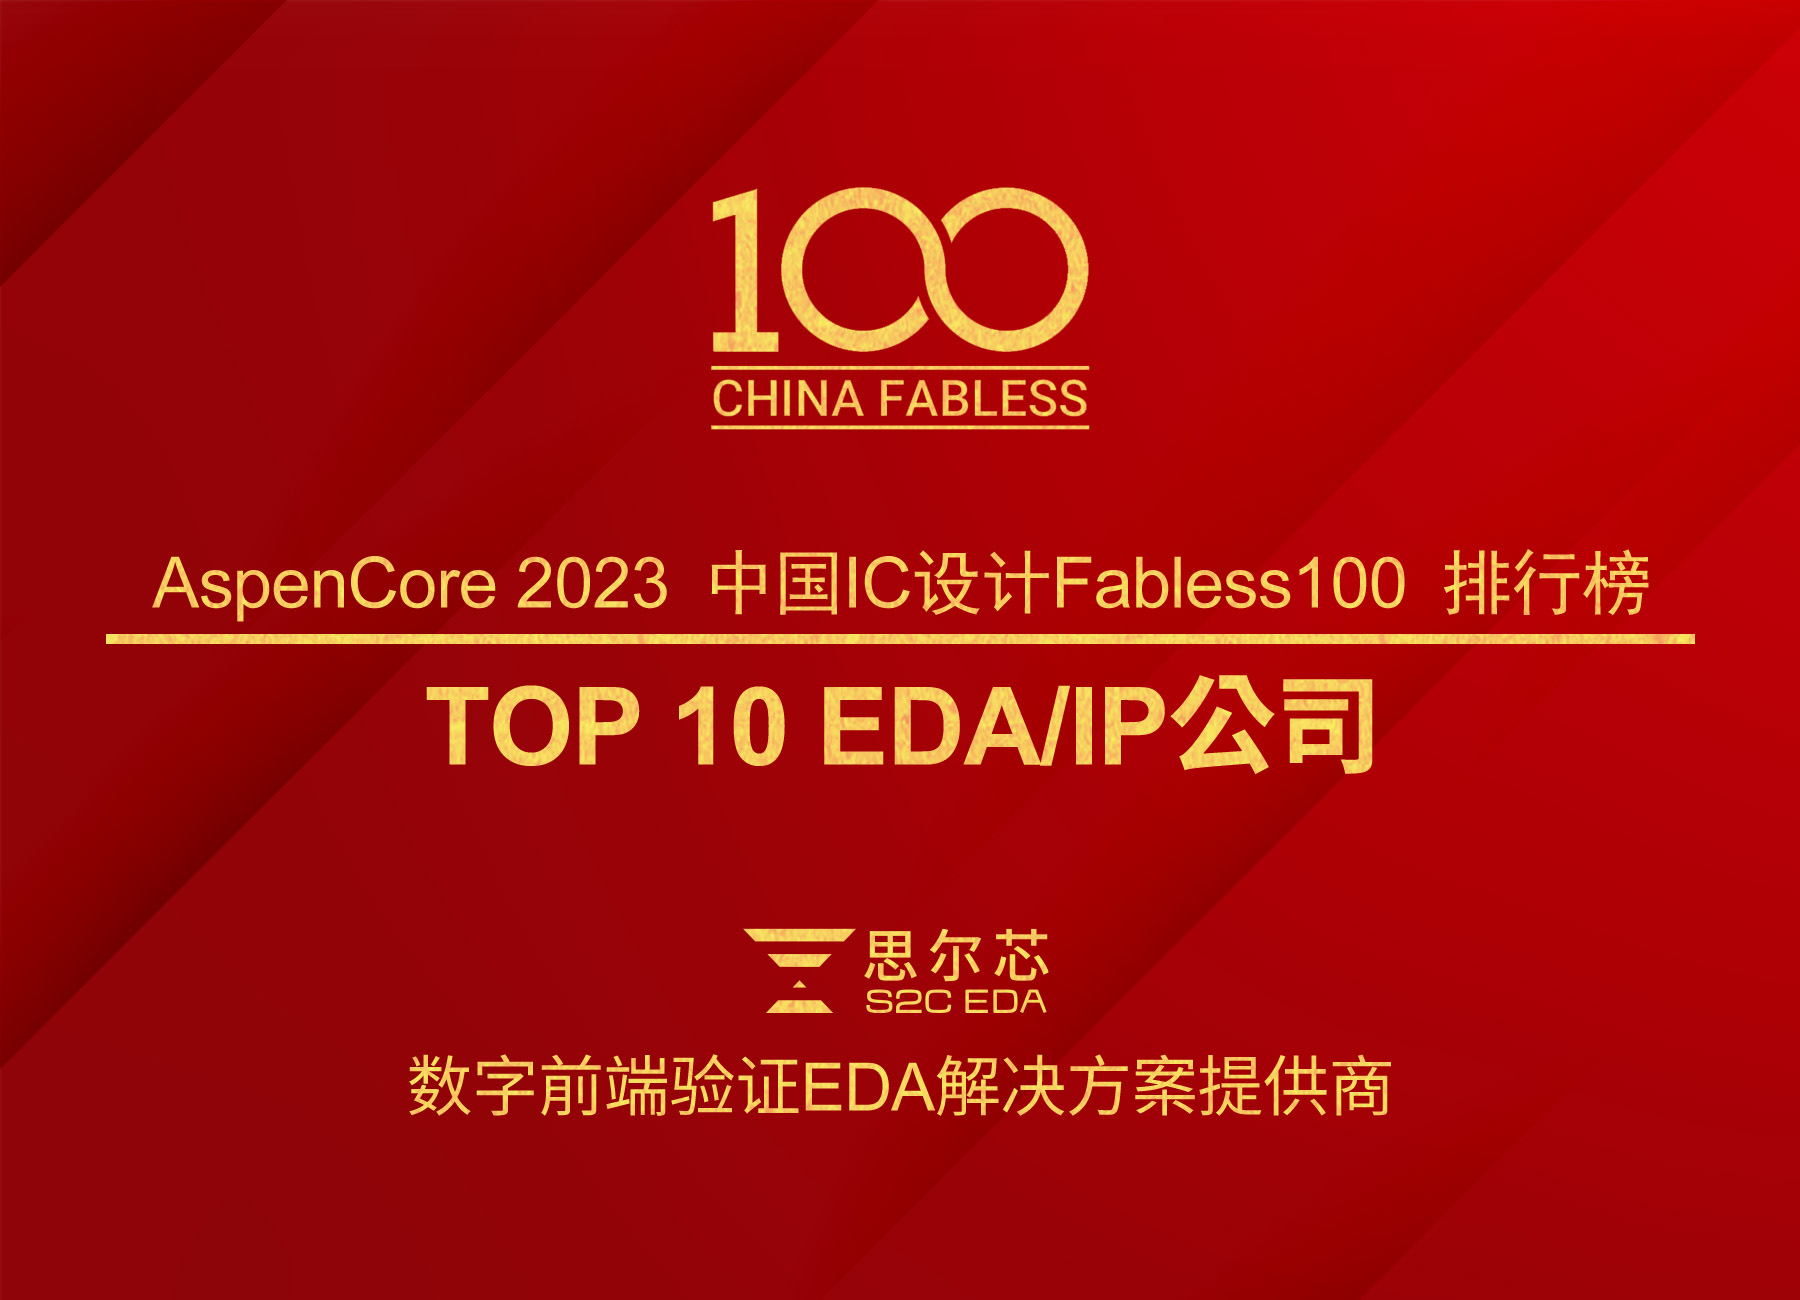 TOP 10 EDA/IP公司